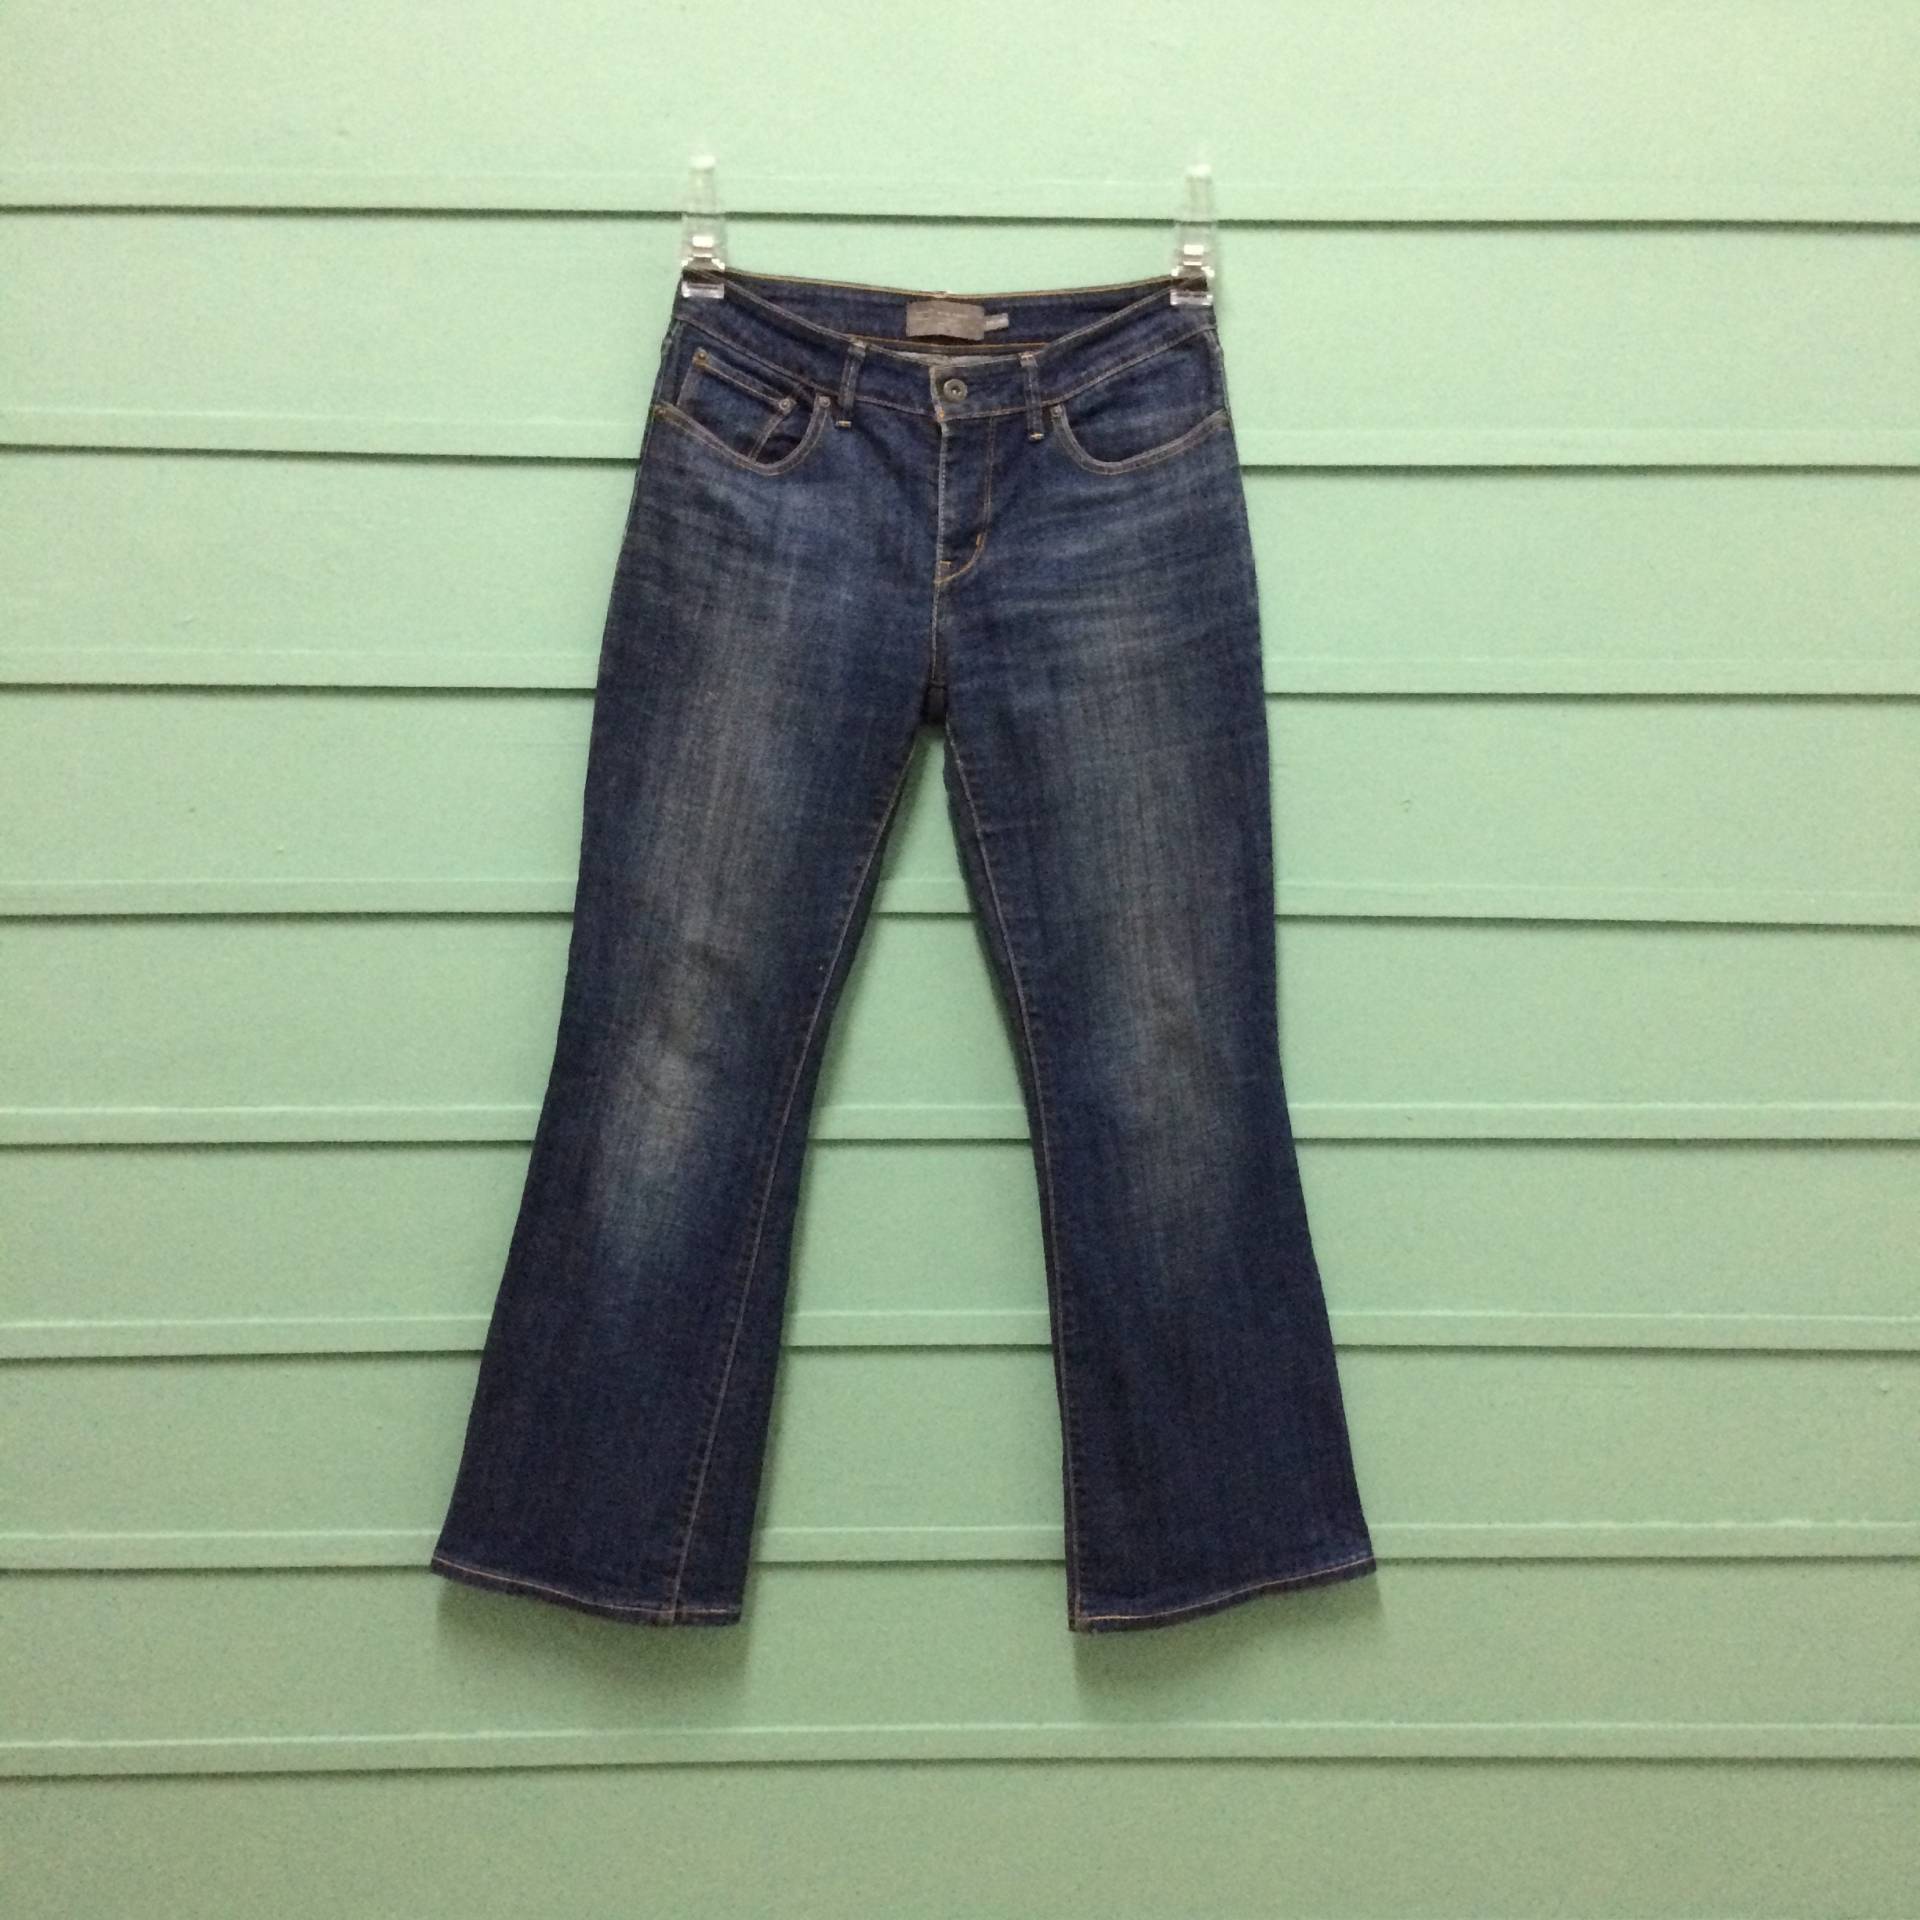 Größe 29 Vintage Distressed Levis Bold Curve Classic Bootcut Jeans W29 L29 Stretch Flared Wide Leg Girlfriend Taille 29" von BackyardFashion